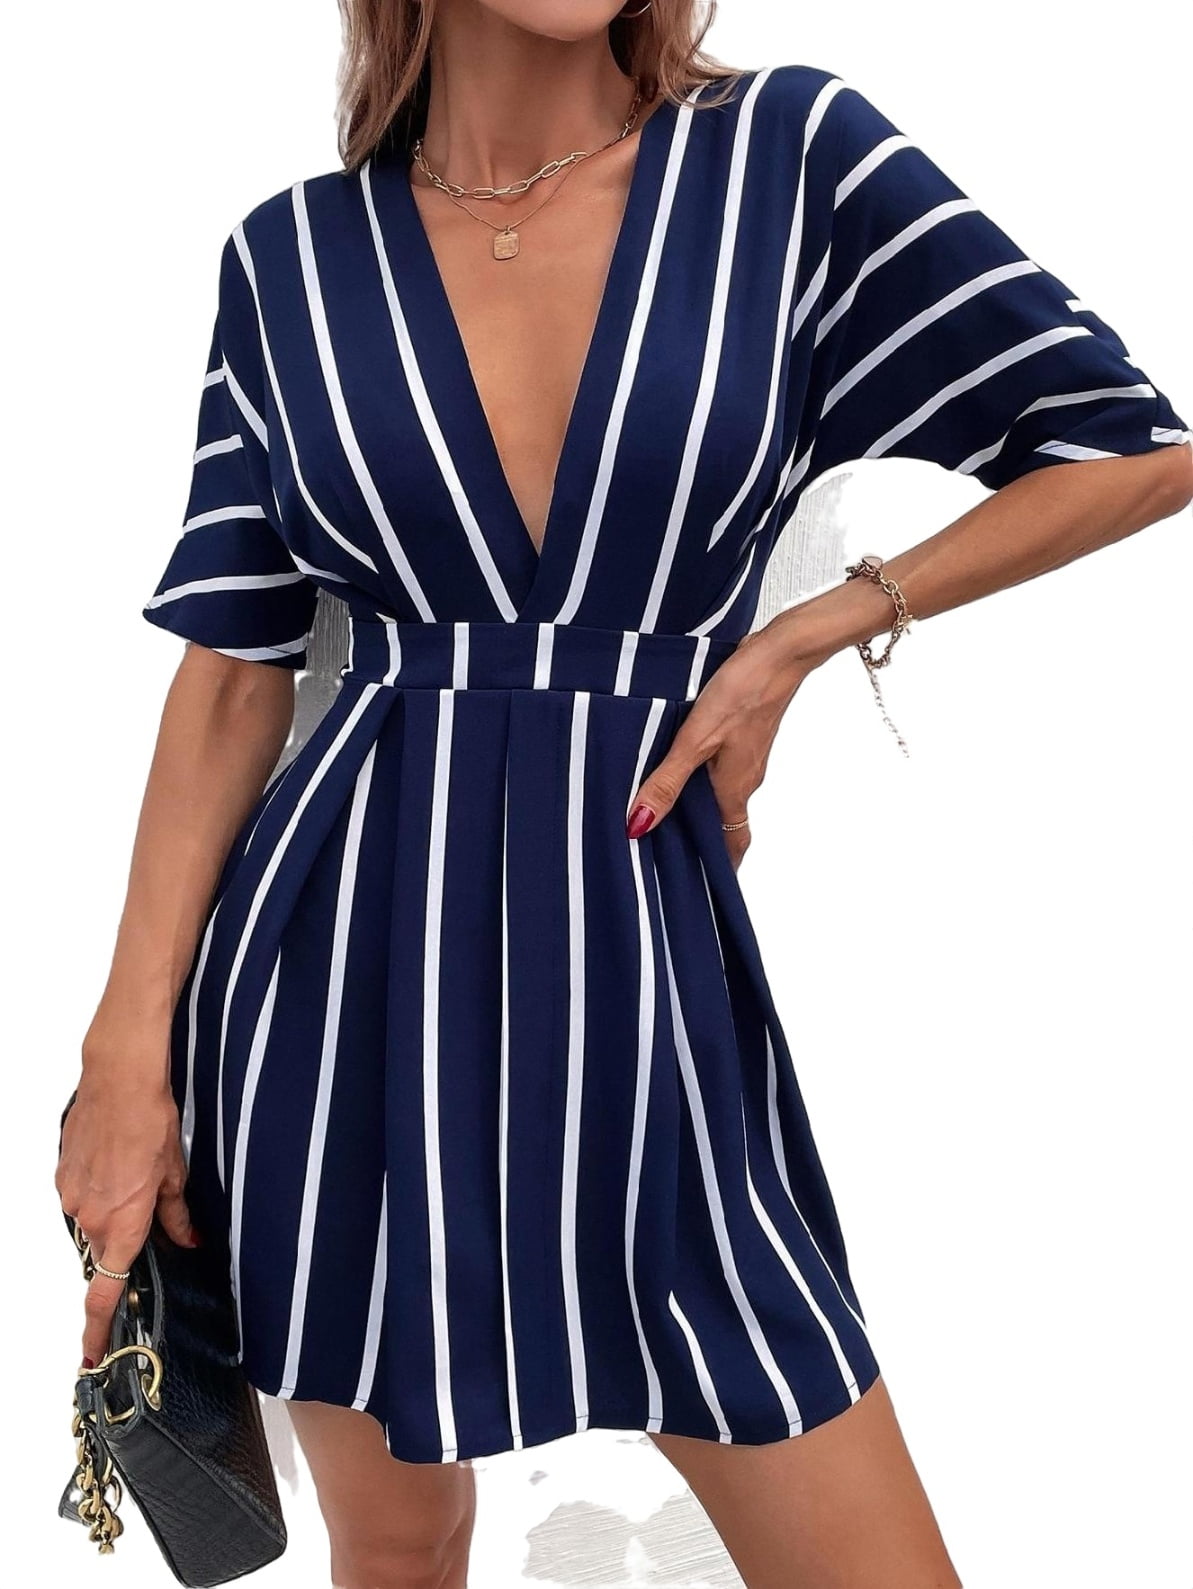 Stella Midi Dress in Black and White Stripe | iCLOTHING - iCLOTHING